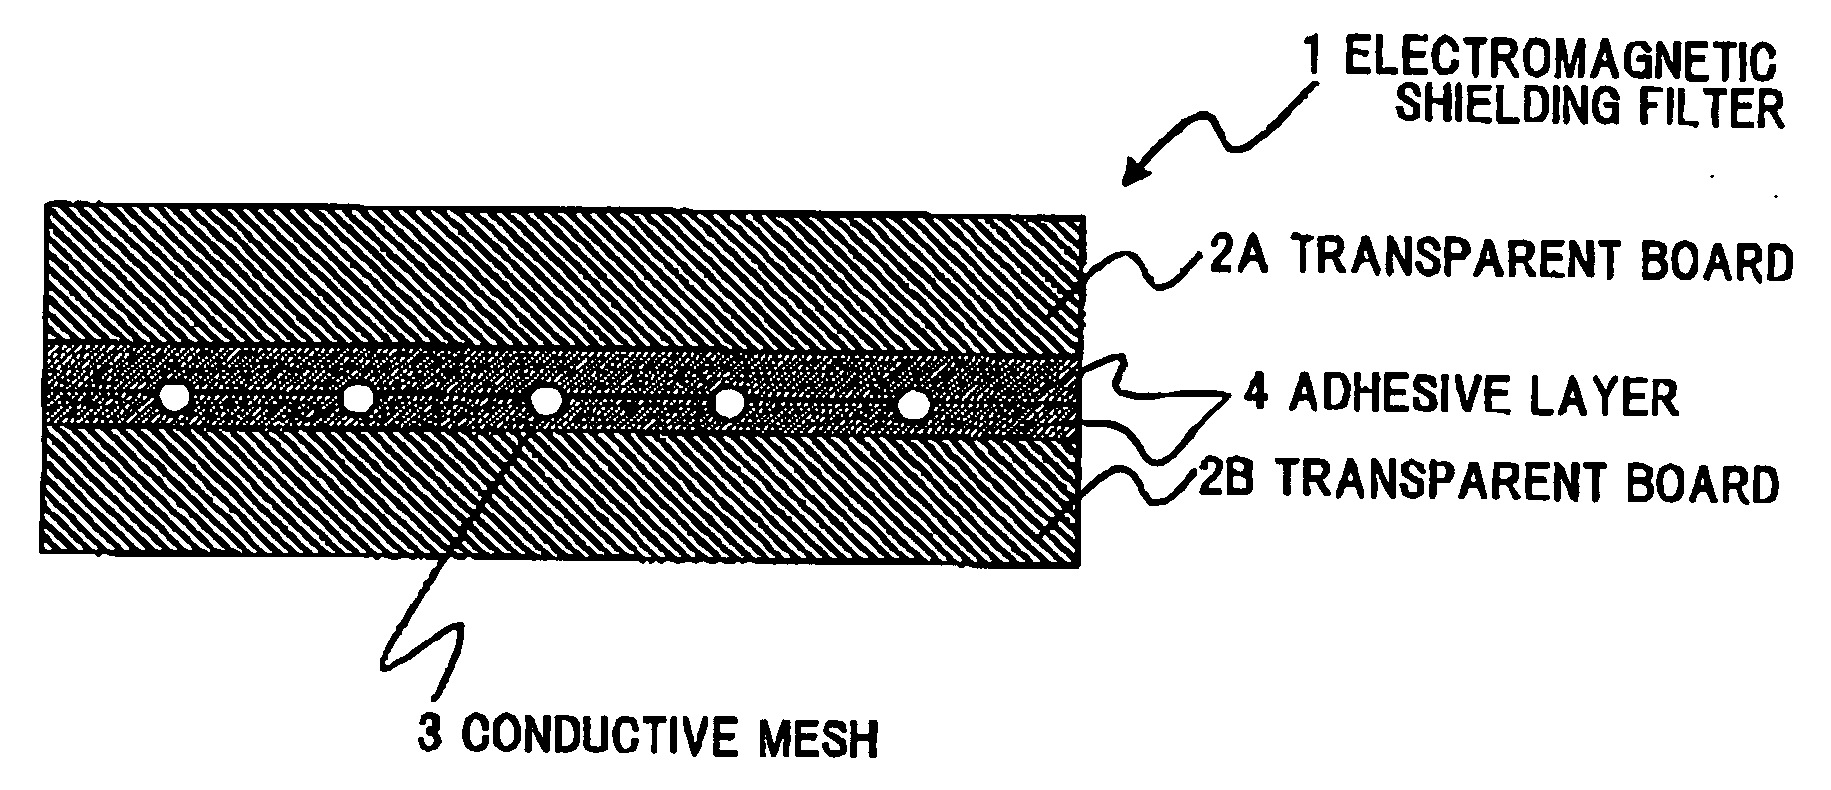 Electromagnetic shielding filter